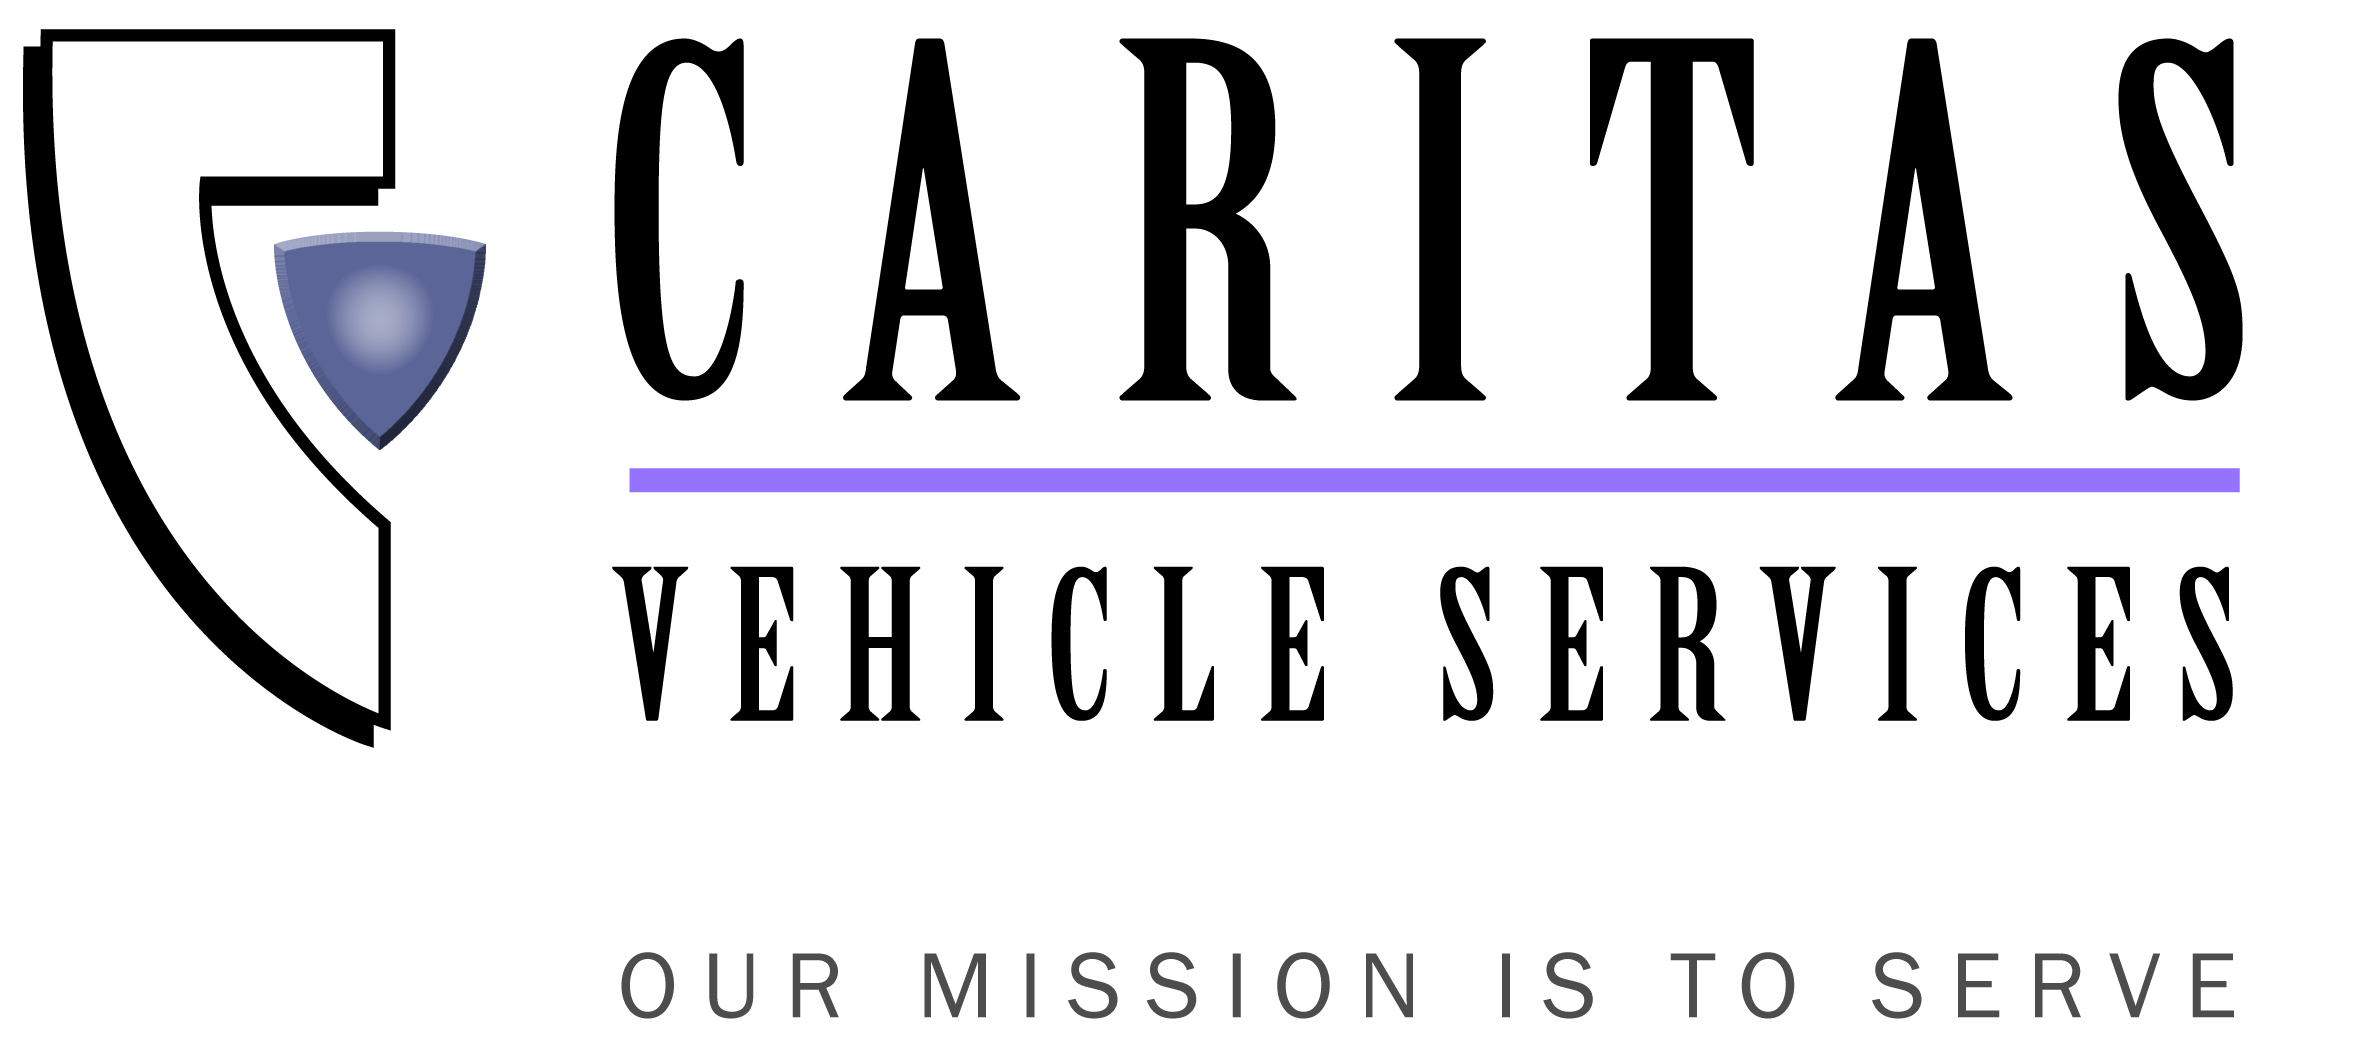 Caritas Vehicle Services Logo